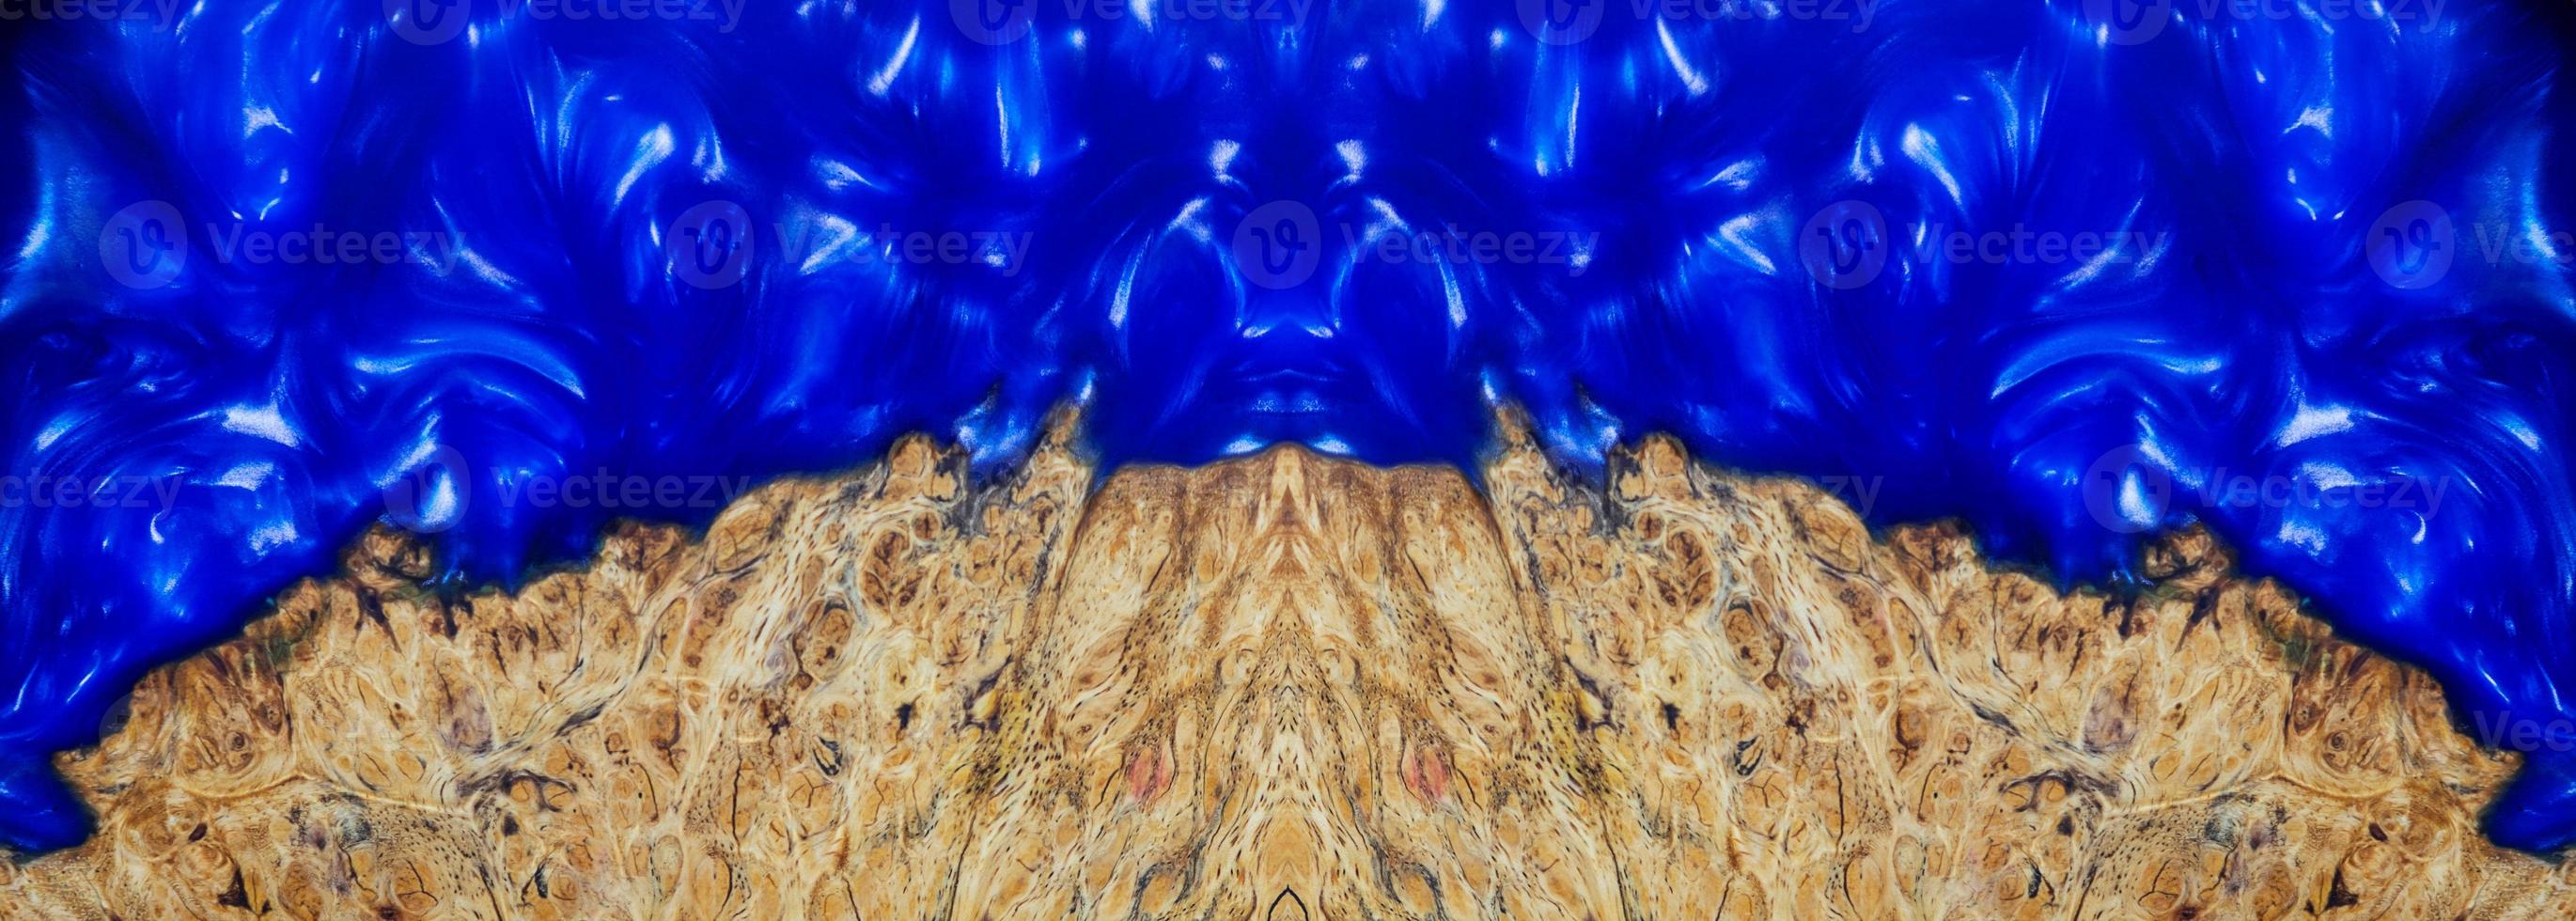 ovanifrån gjutning blå epoxiharts burl trä bakgrund, natur lönn trä foto